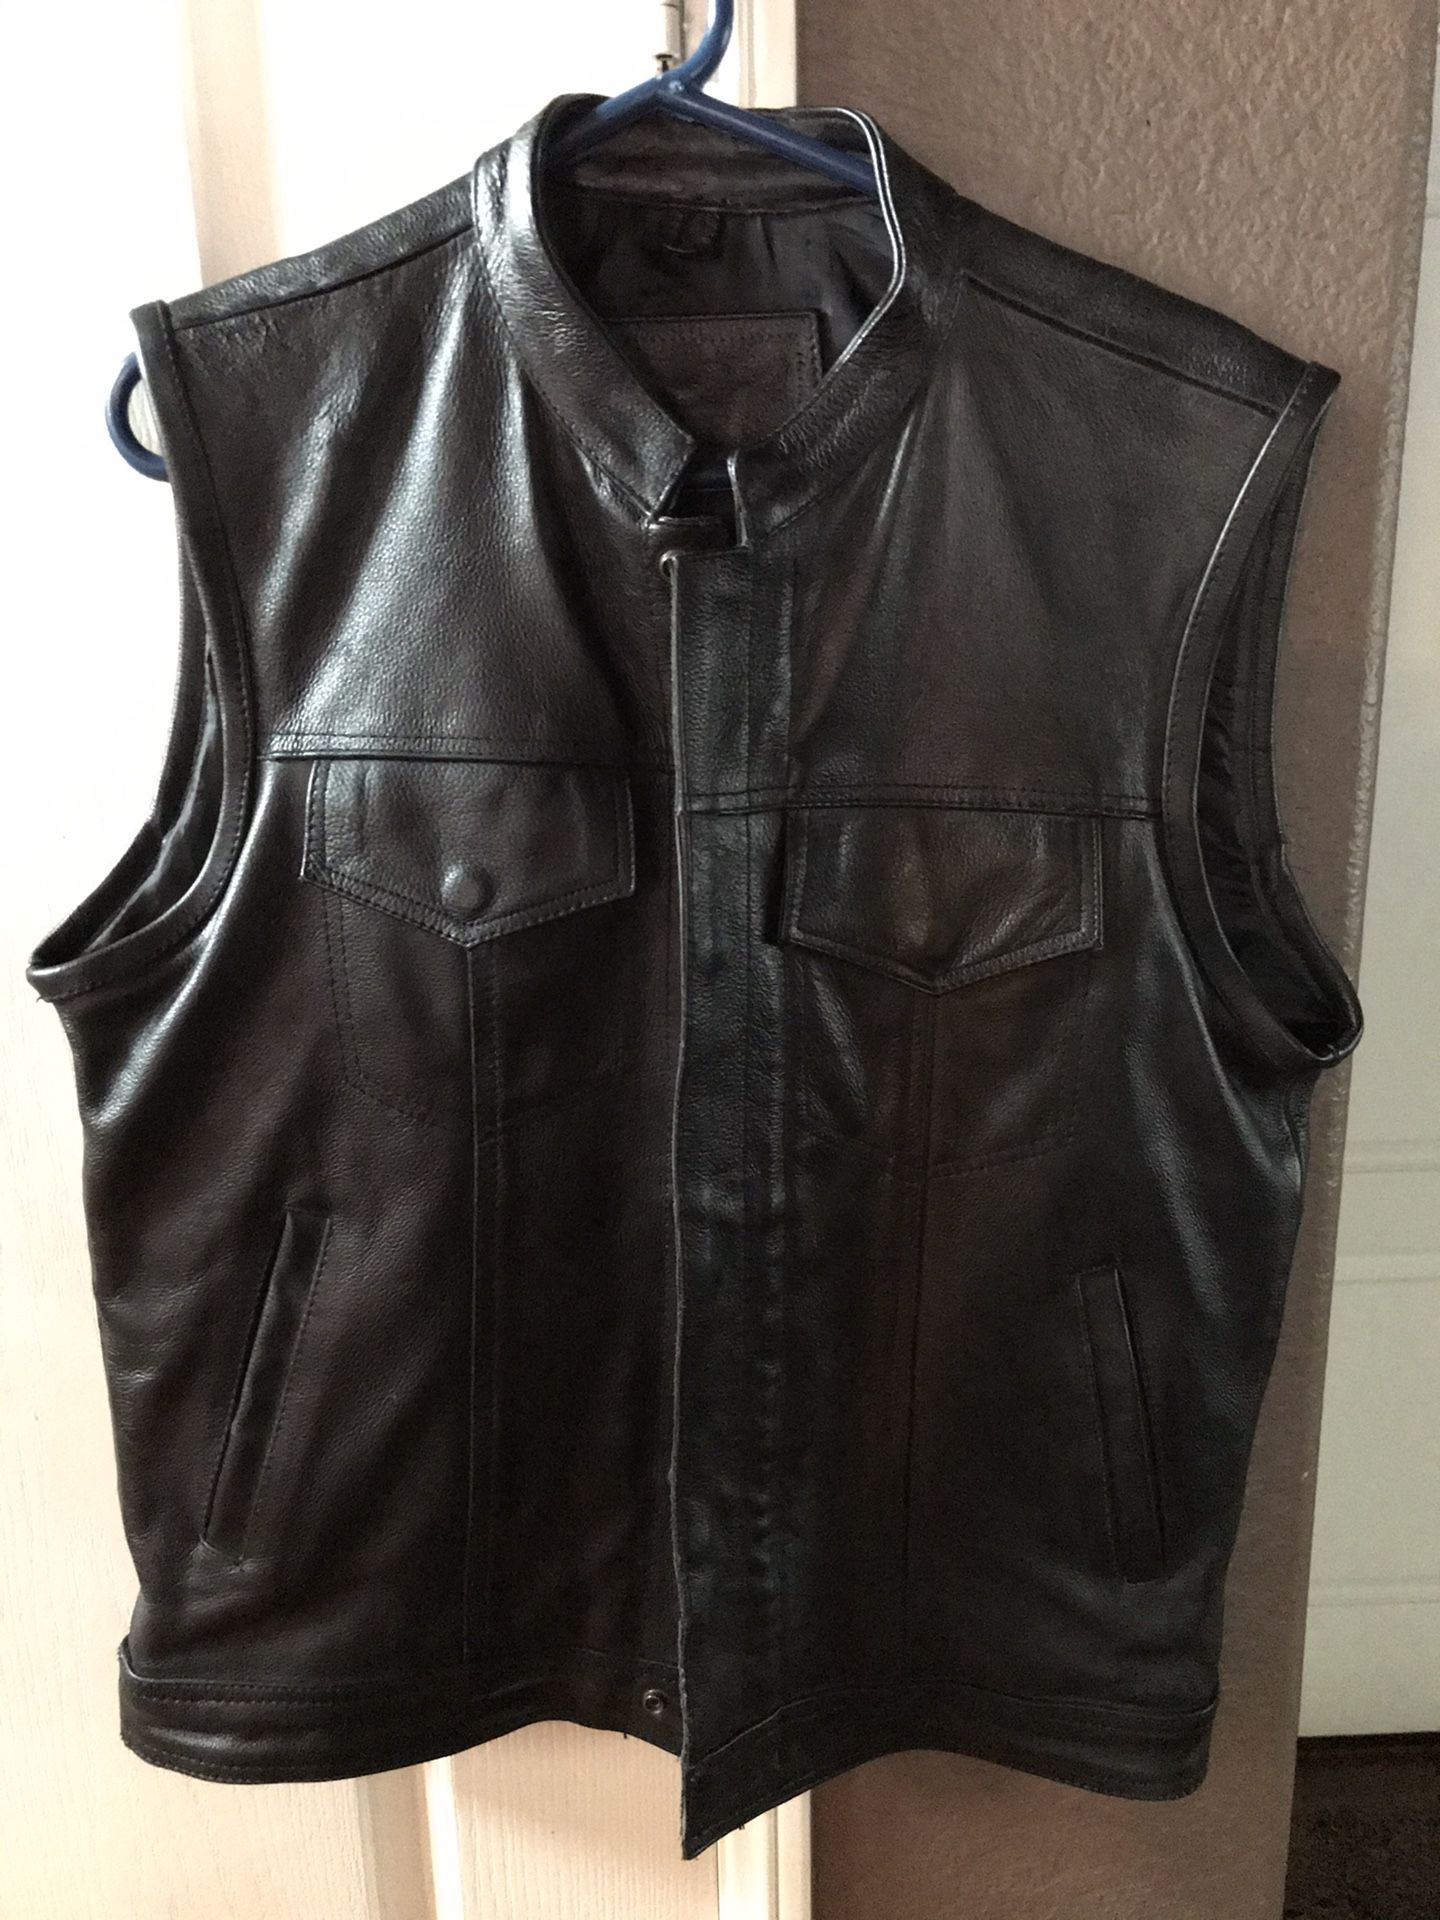 Leather Men’s Motorcycle Vest size Medium